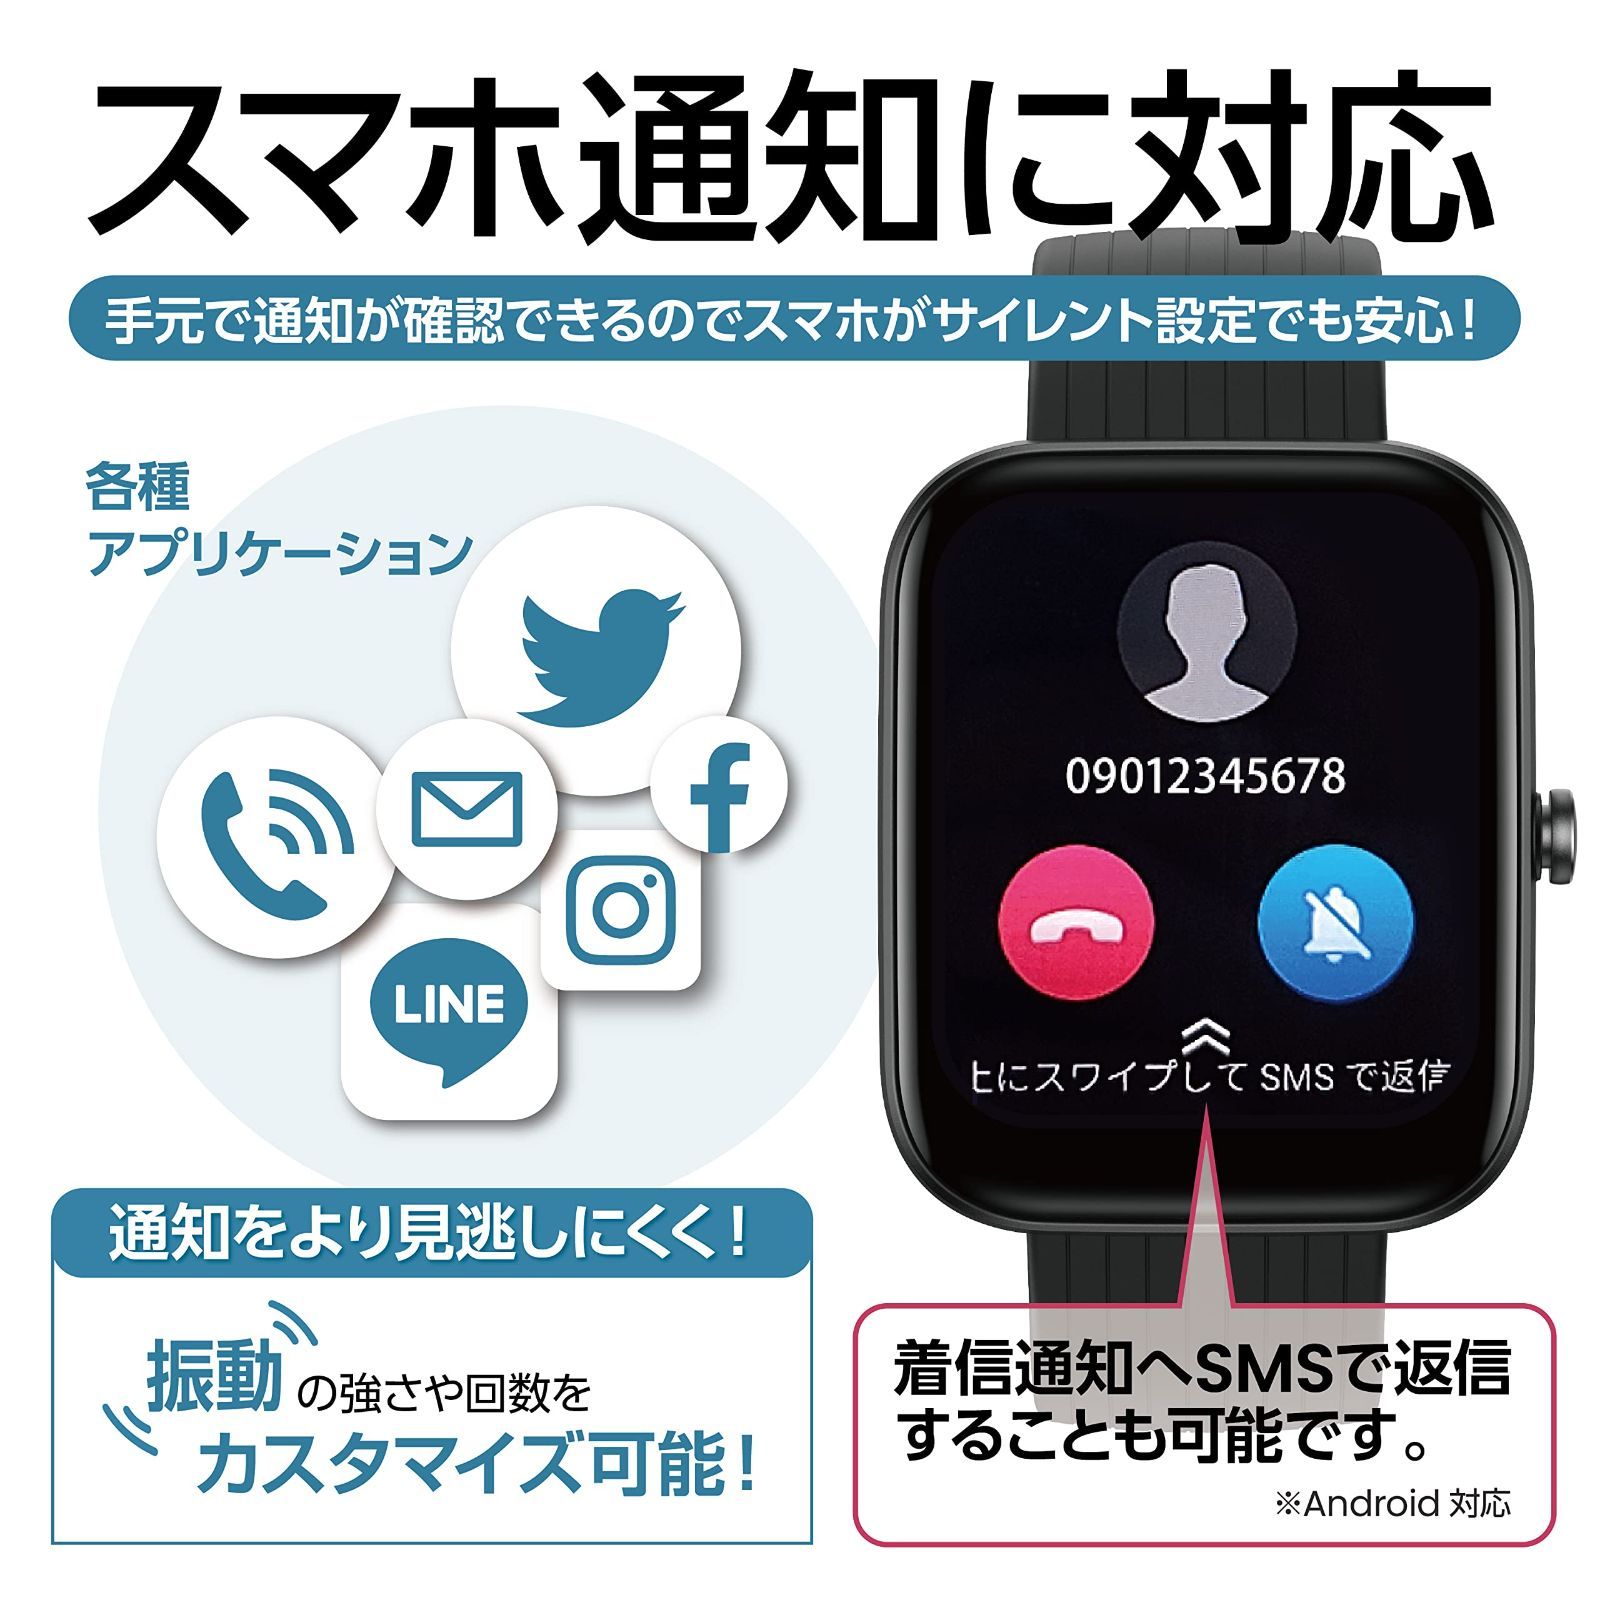 Amazfit Bip 3 スマートウォッチ 44mm 日本語対応 5ATM 防水 心拍数 ストレス 睡眠 60種類スポーツモード 音楽再生 LINE  着信通知 遠隔カメラ 軽量 薄型 多機能 iphone android対応（ブルー） - メルカリ